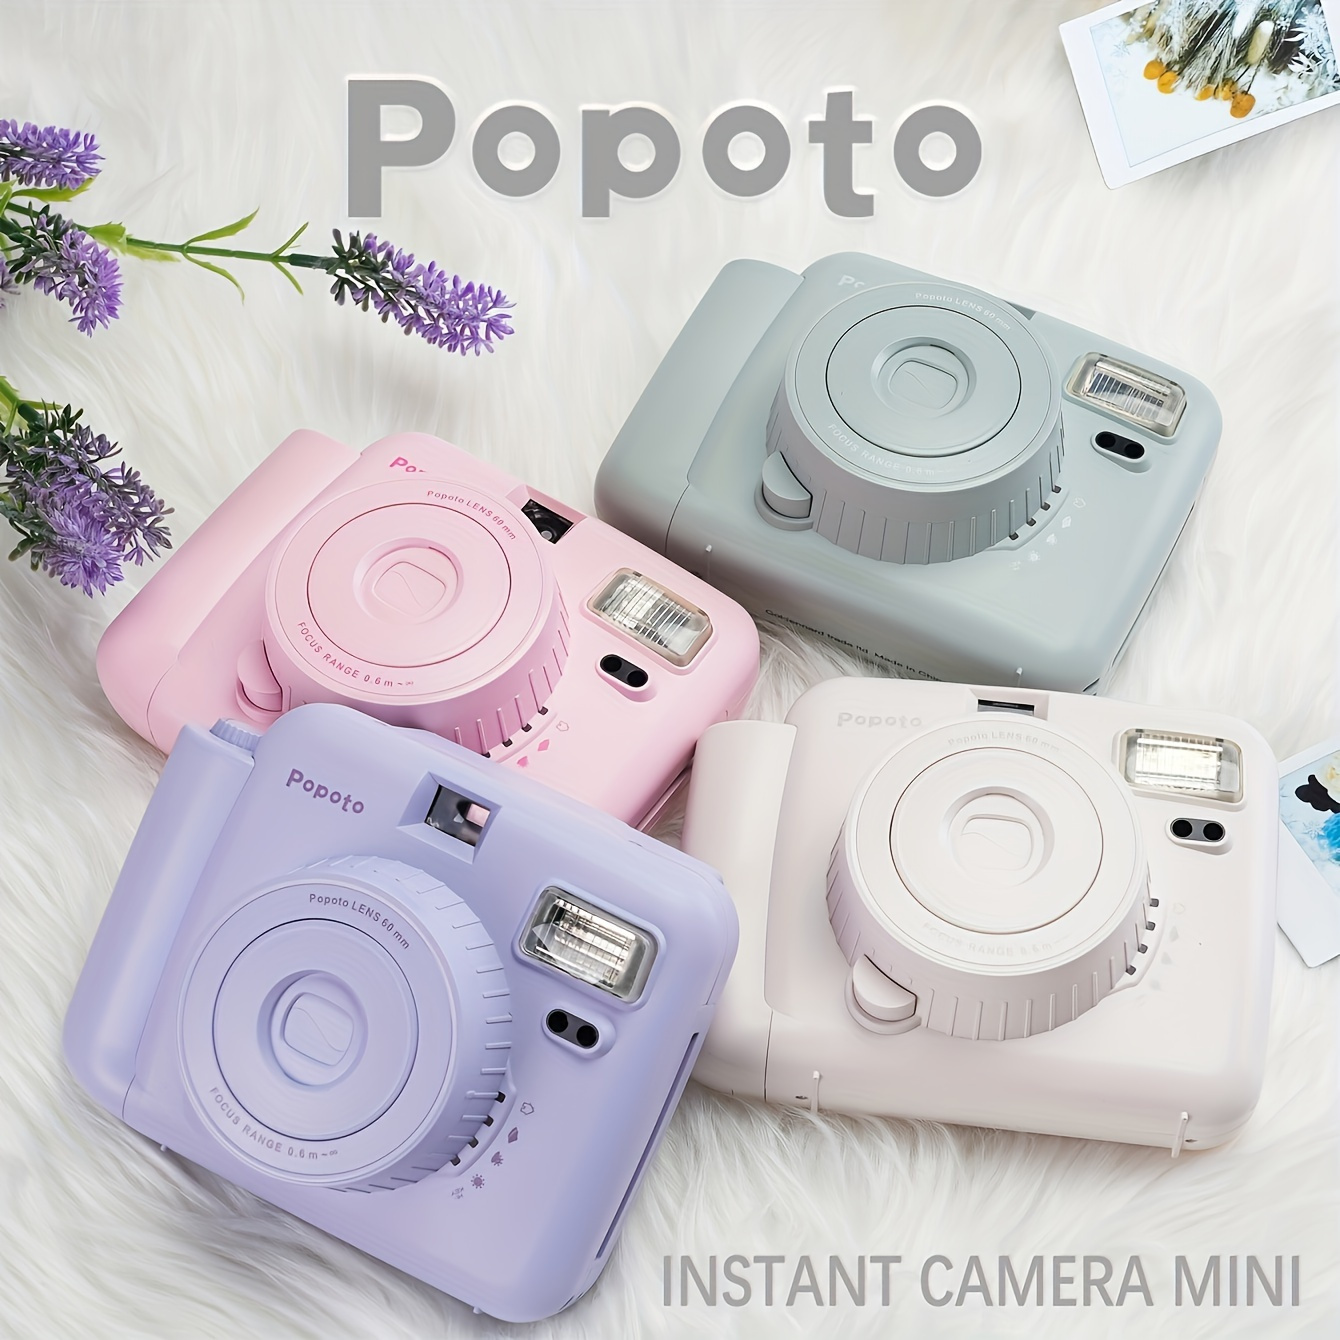 Photo Album for Fujifilm Instax Mini Camera, 180 Pockets Instax Mini Album  with Memo Areas, 2X3 Photo Album for Polaroid 2x3 mini Camera, Fujifilm